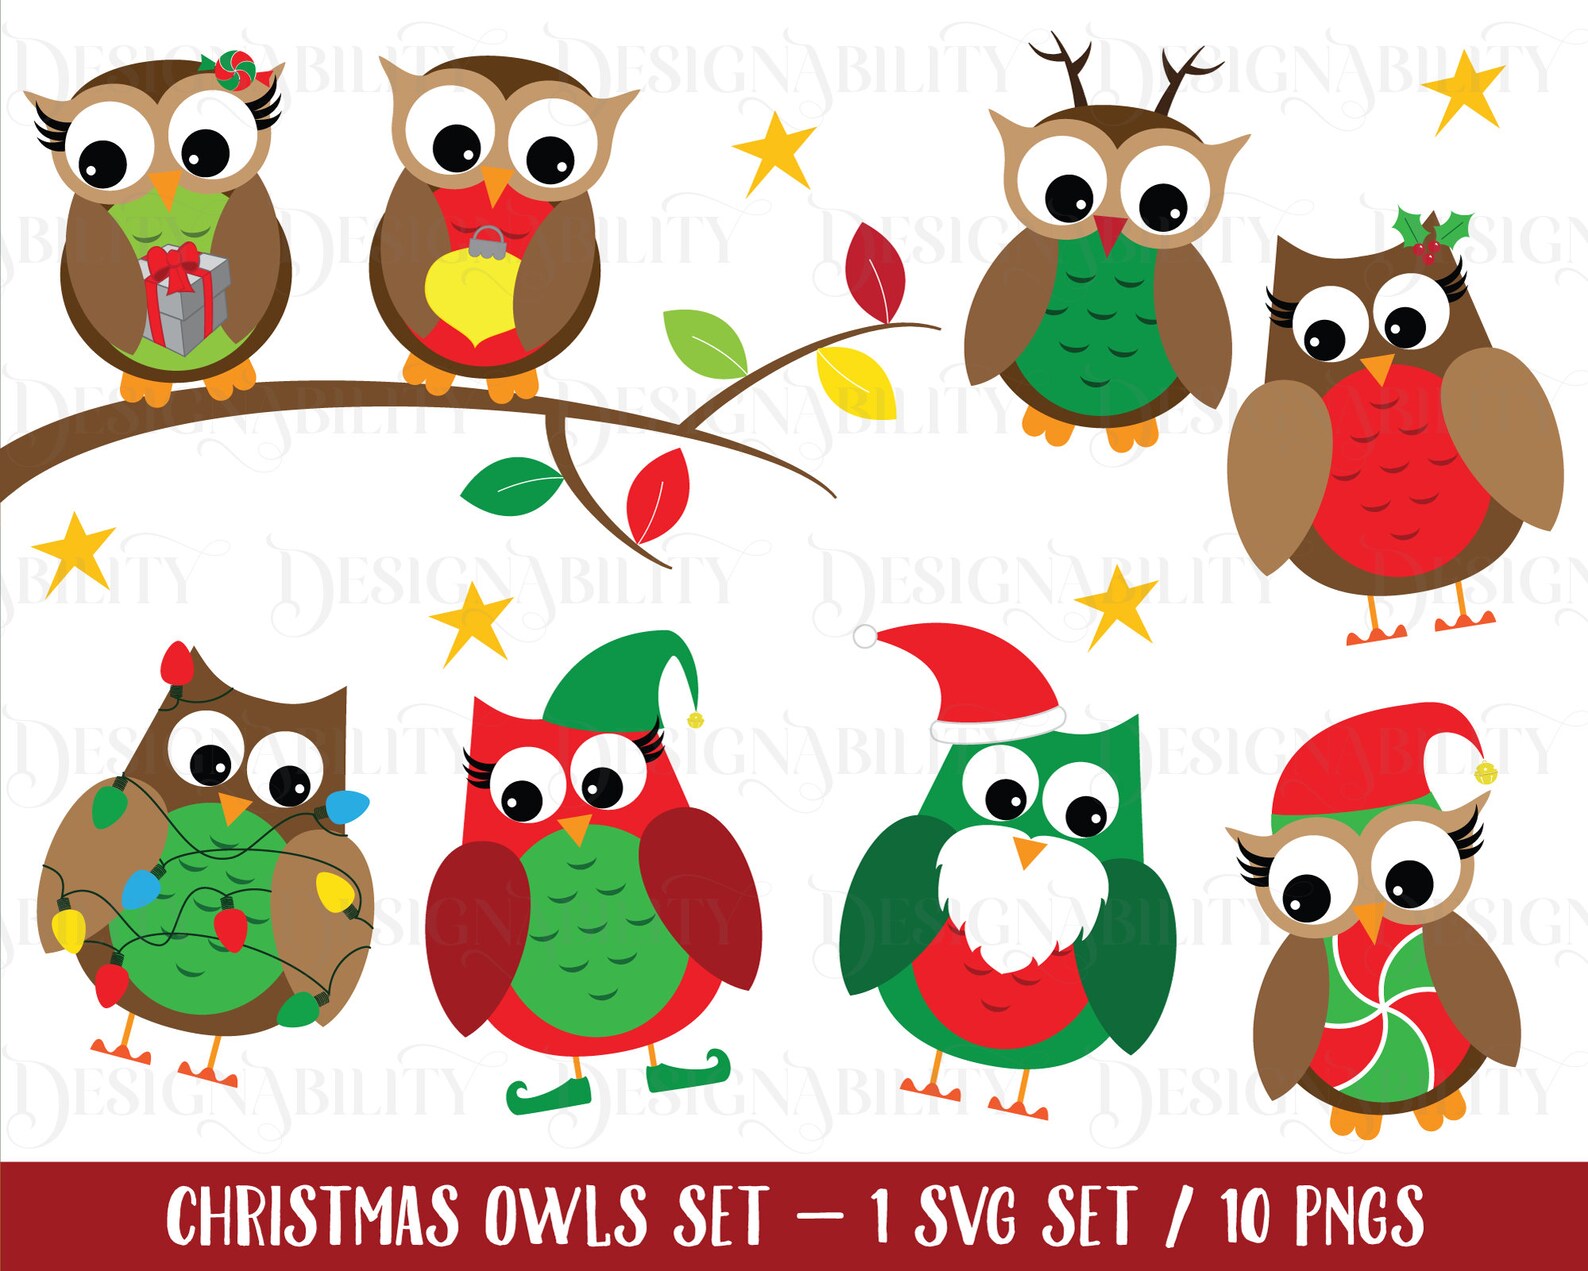 Christmas Owls Clip Art Set SVG & 10 Pngs Digital Download | Etsy